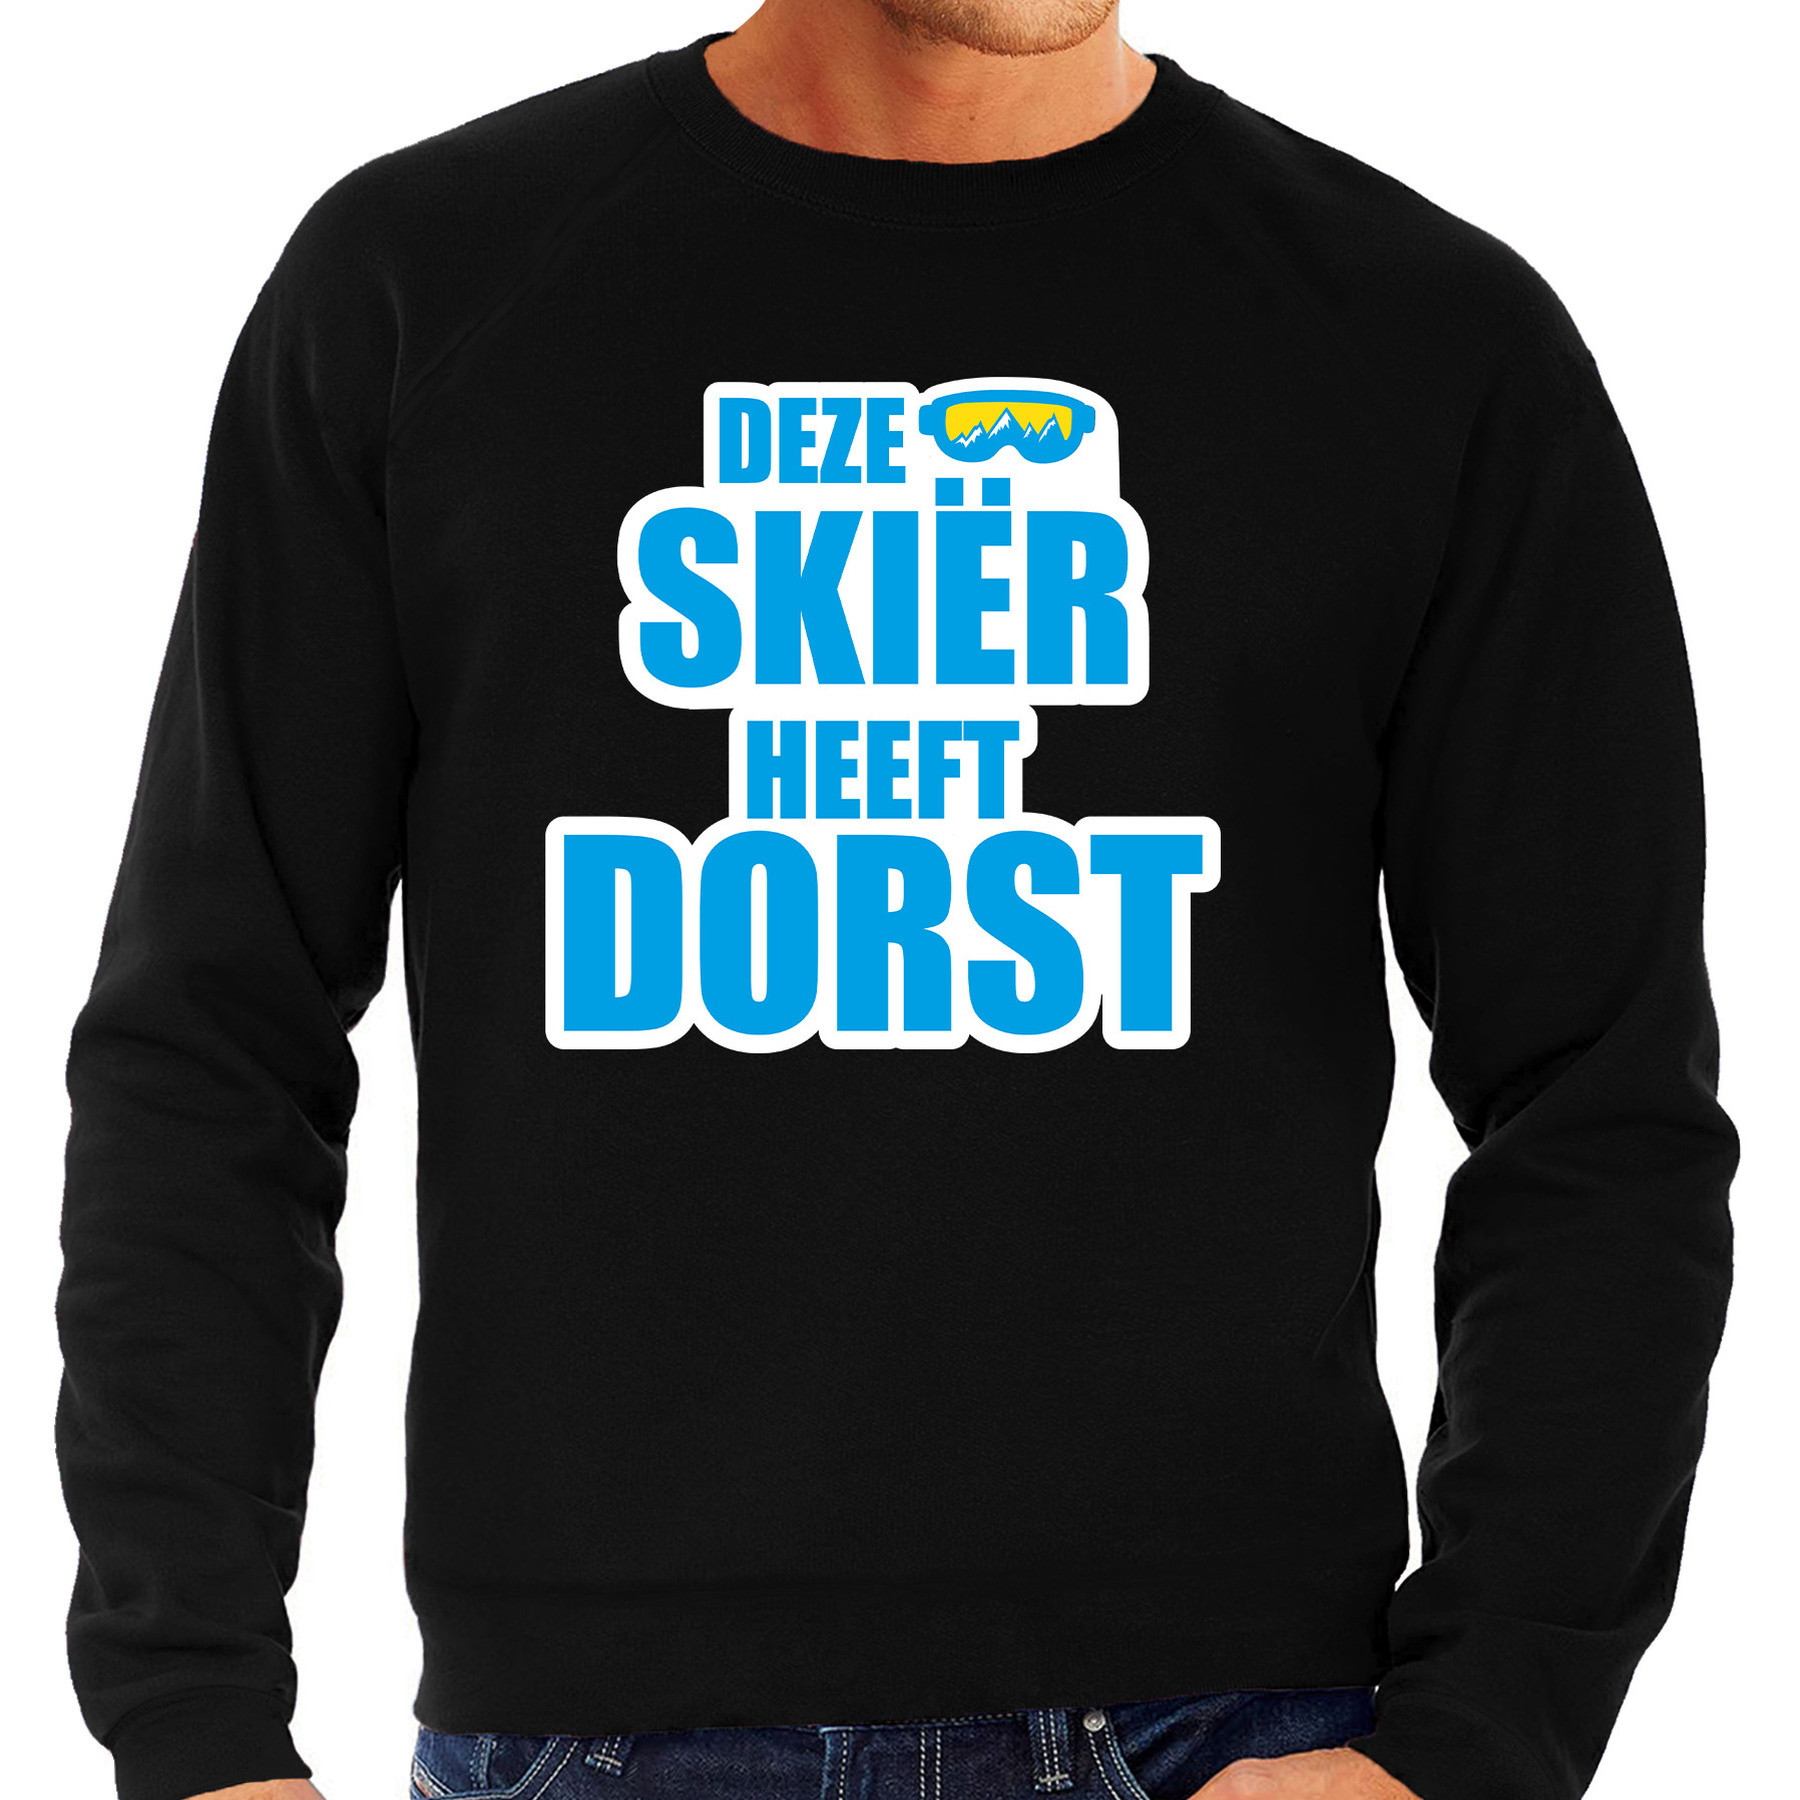 Apres ski trui Deze skieer heeft dorst zwart heren Wintersport sweater Foute apres ski outfit